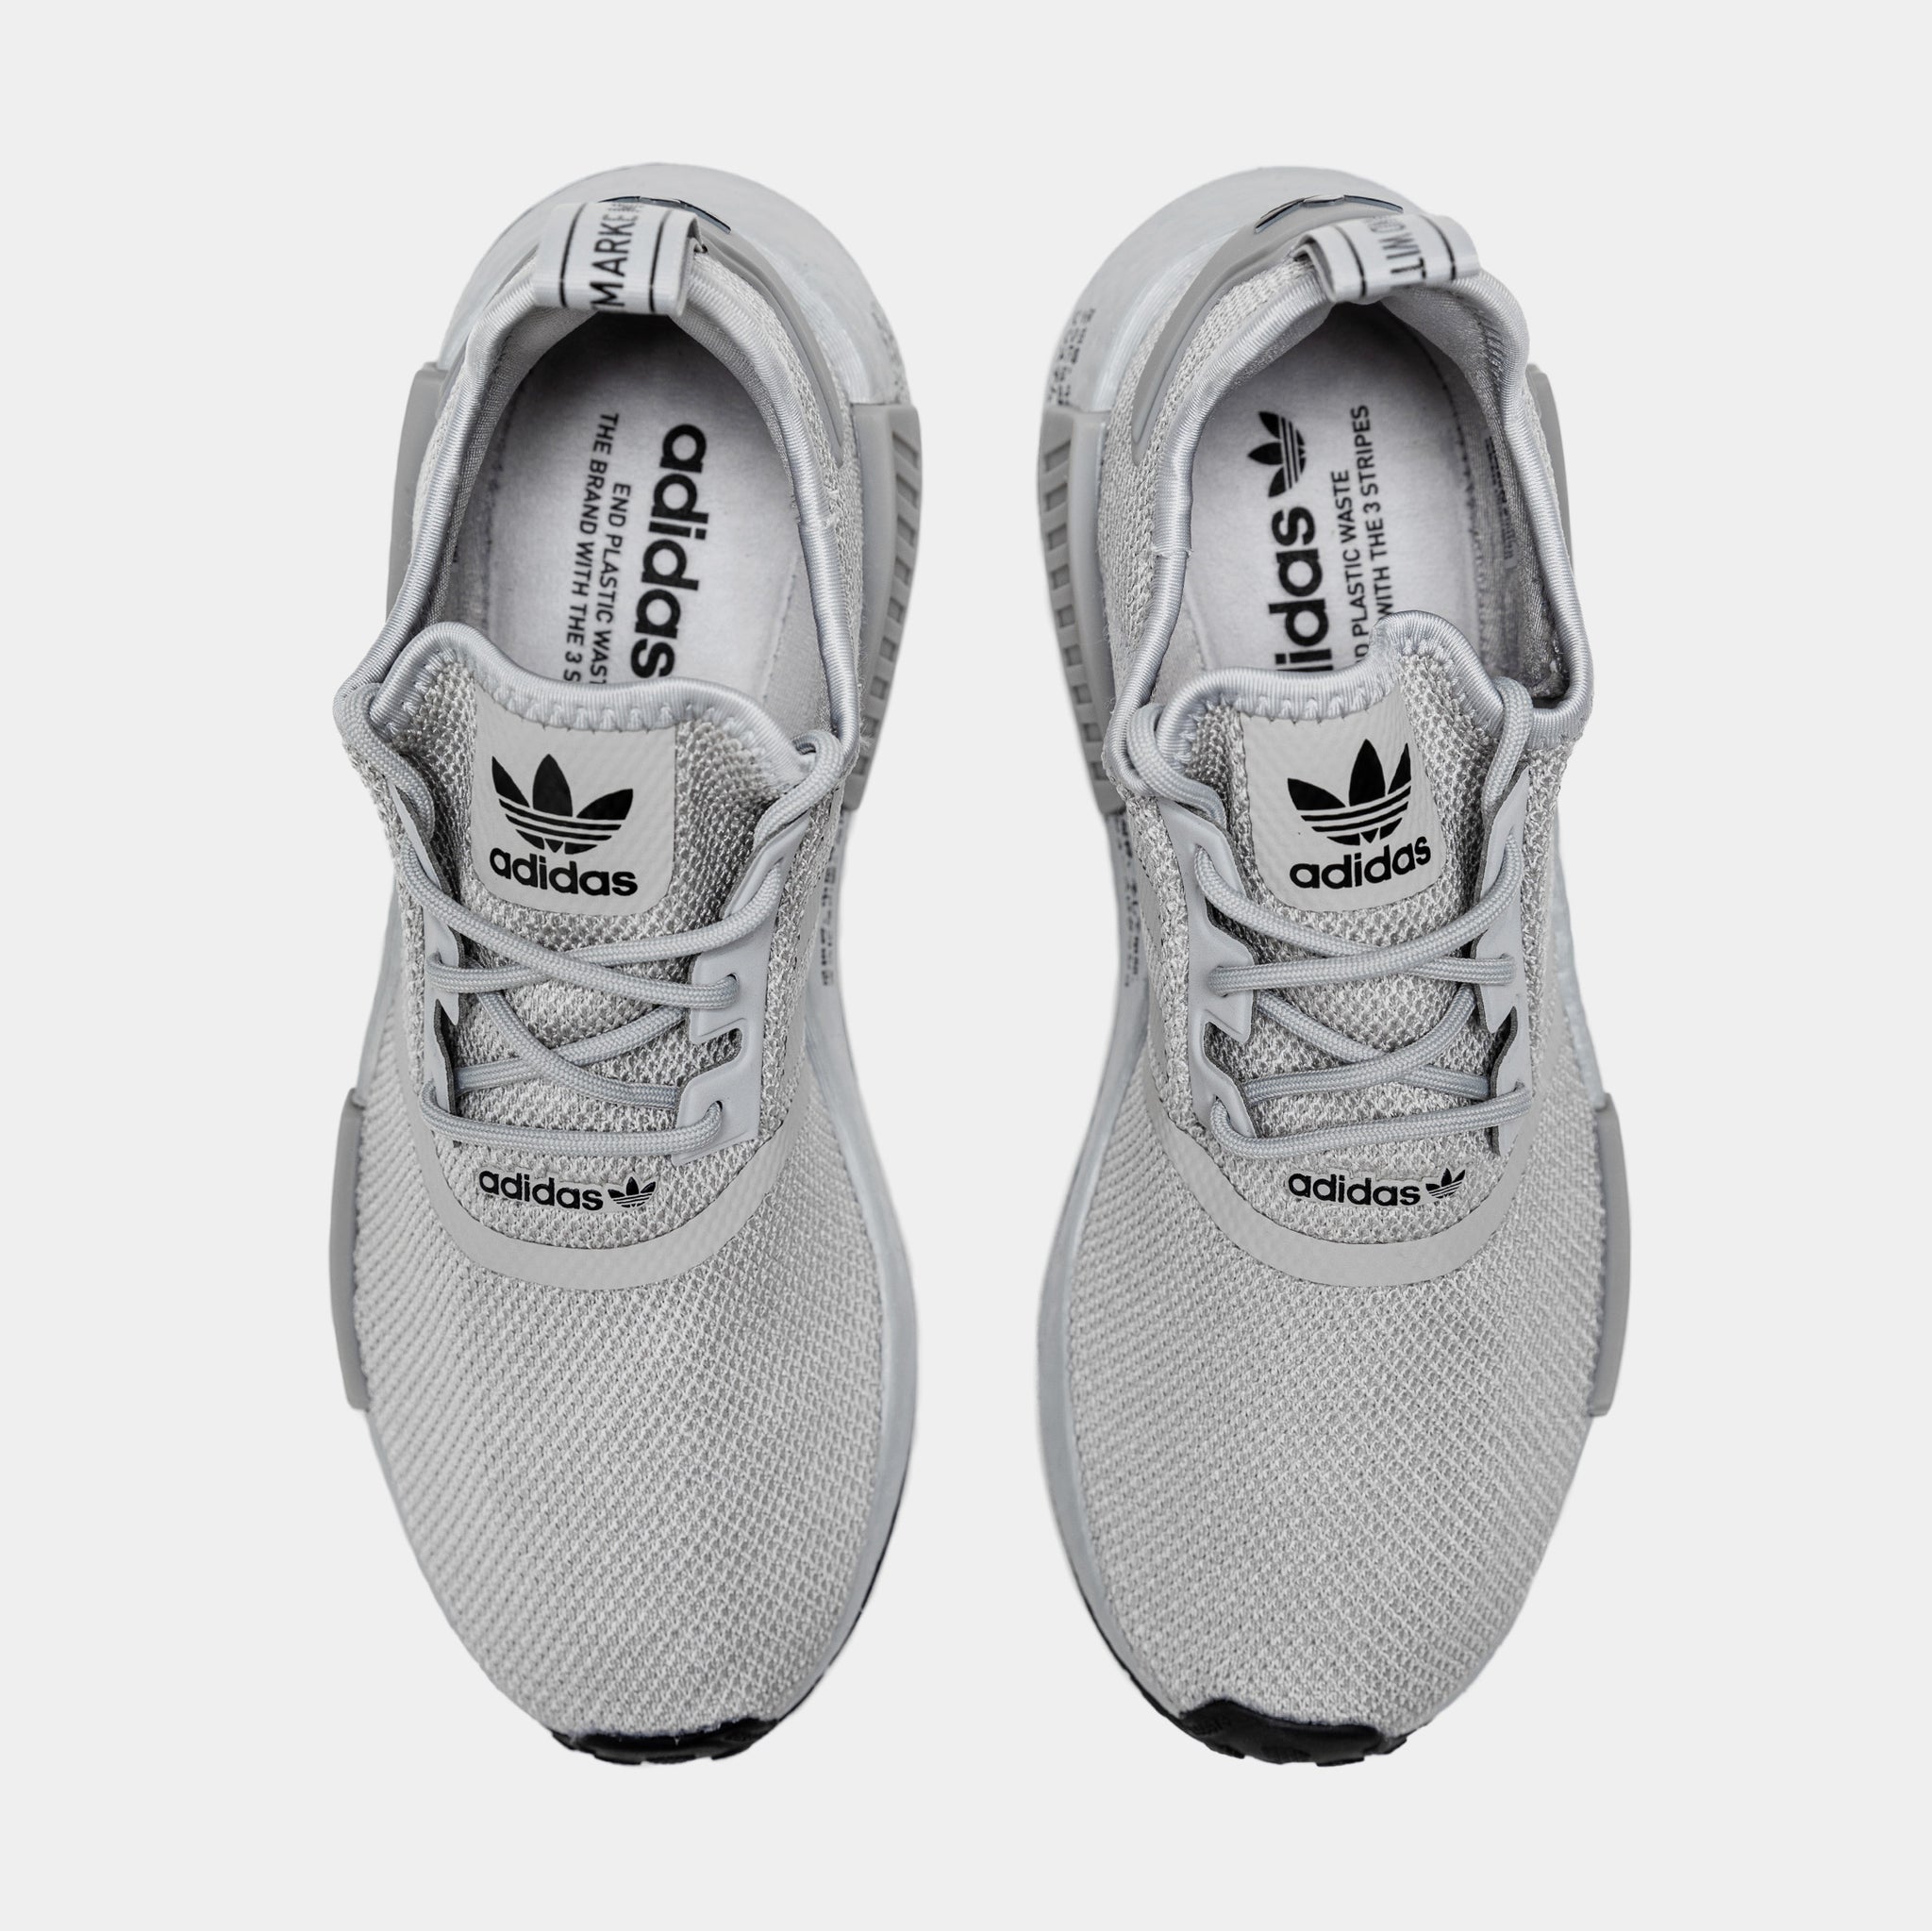 Adidas Originals Men's NMD_R1 Shoes, Size 8.5, Black/Grey/Black